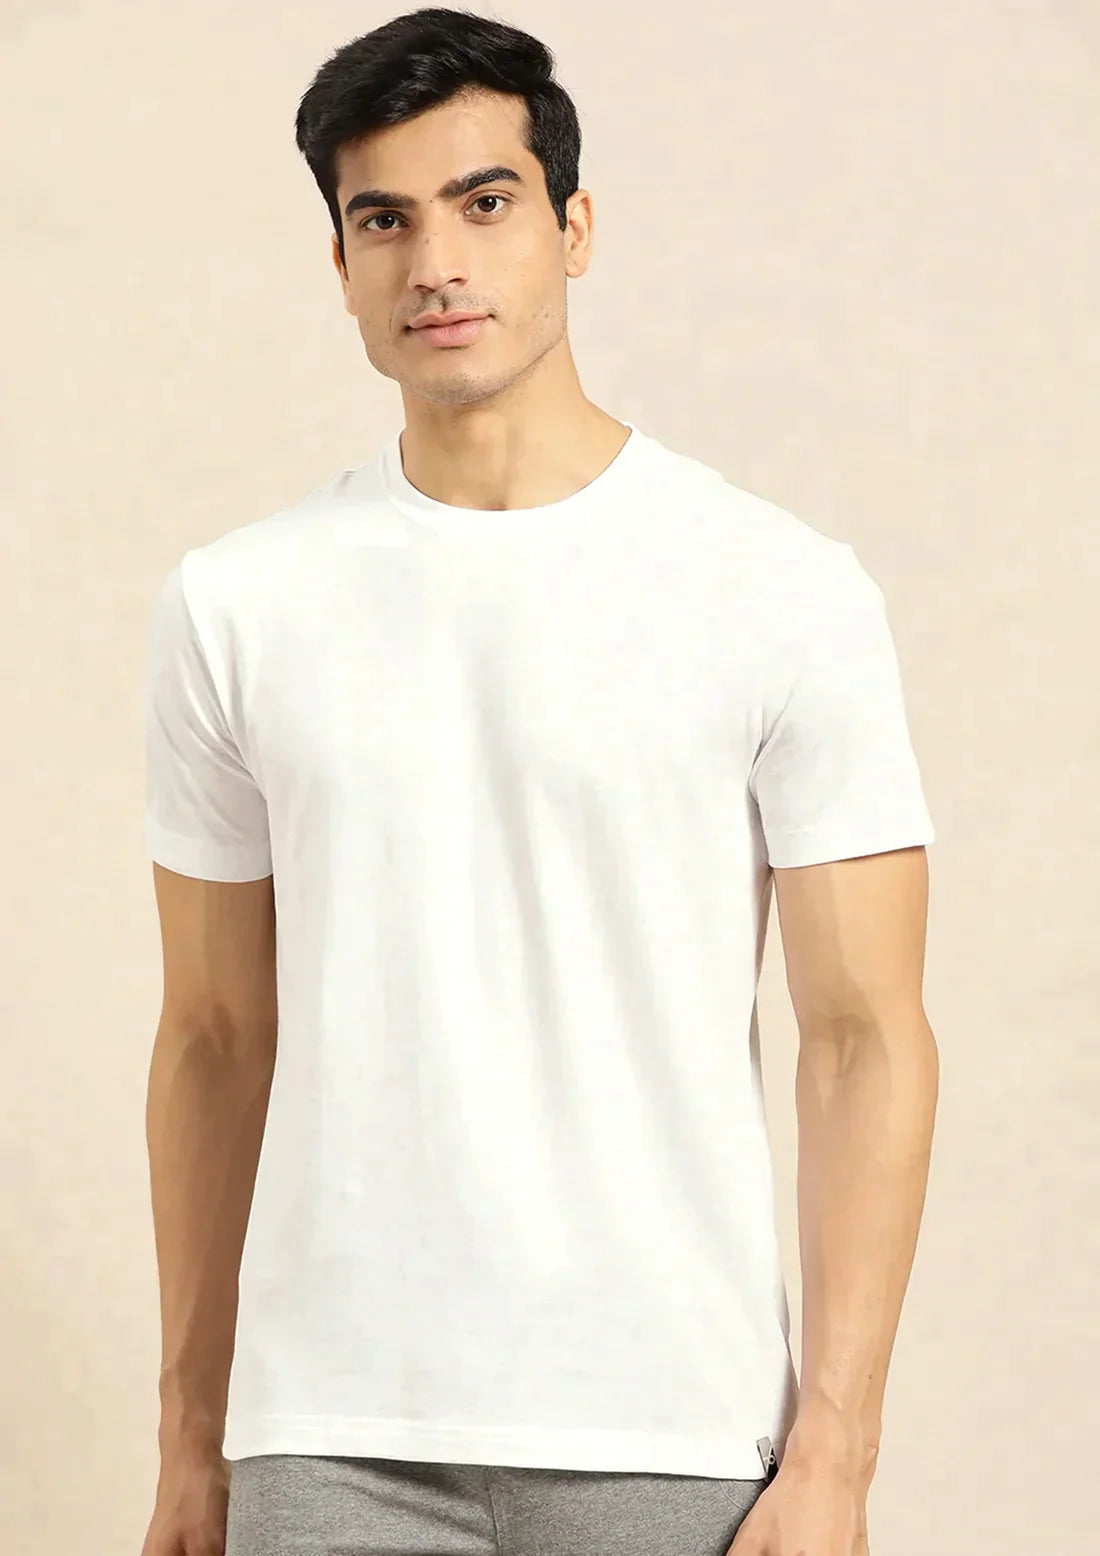 Maroon Vertical Design Printed Mens Cotton Half Sleeves Shirts